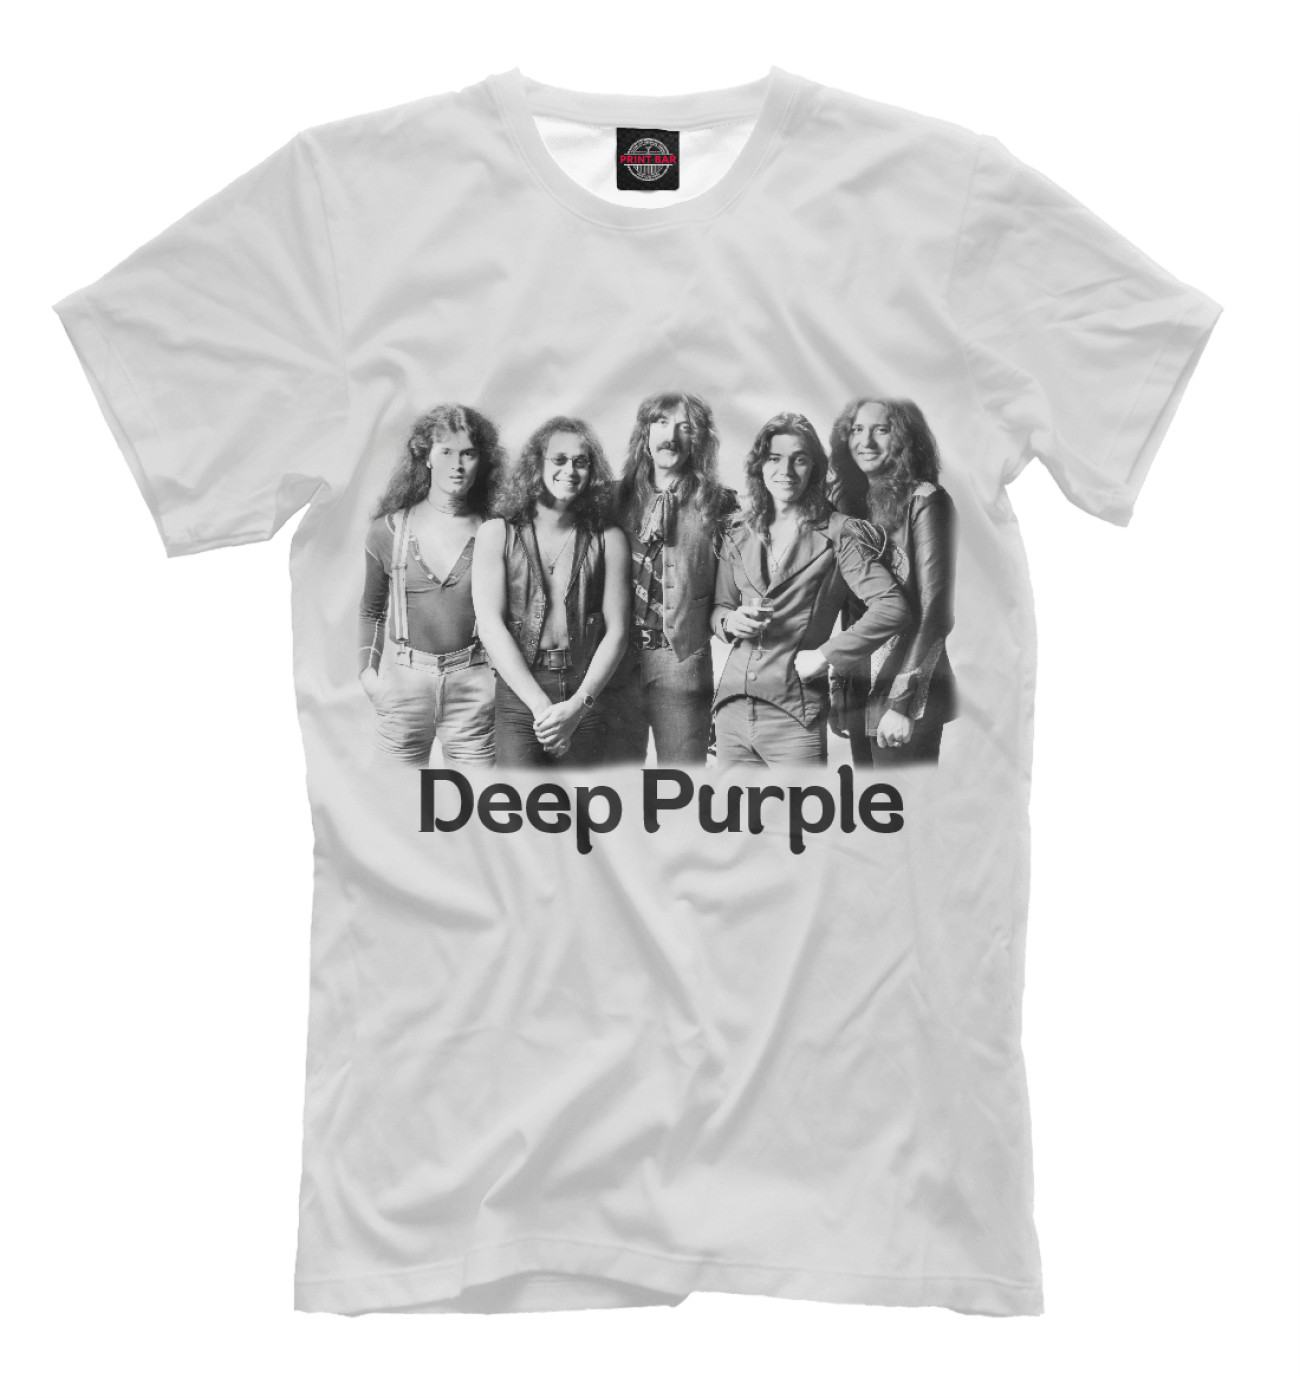 Мужская Футболка Deep Purple, артикул: PUR-862615-fut-2